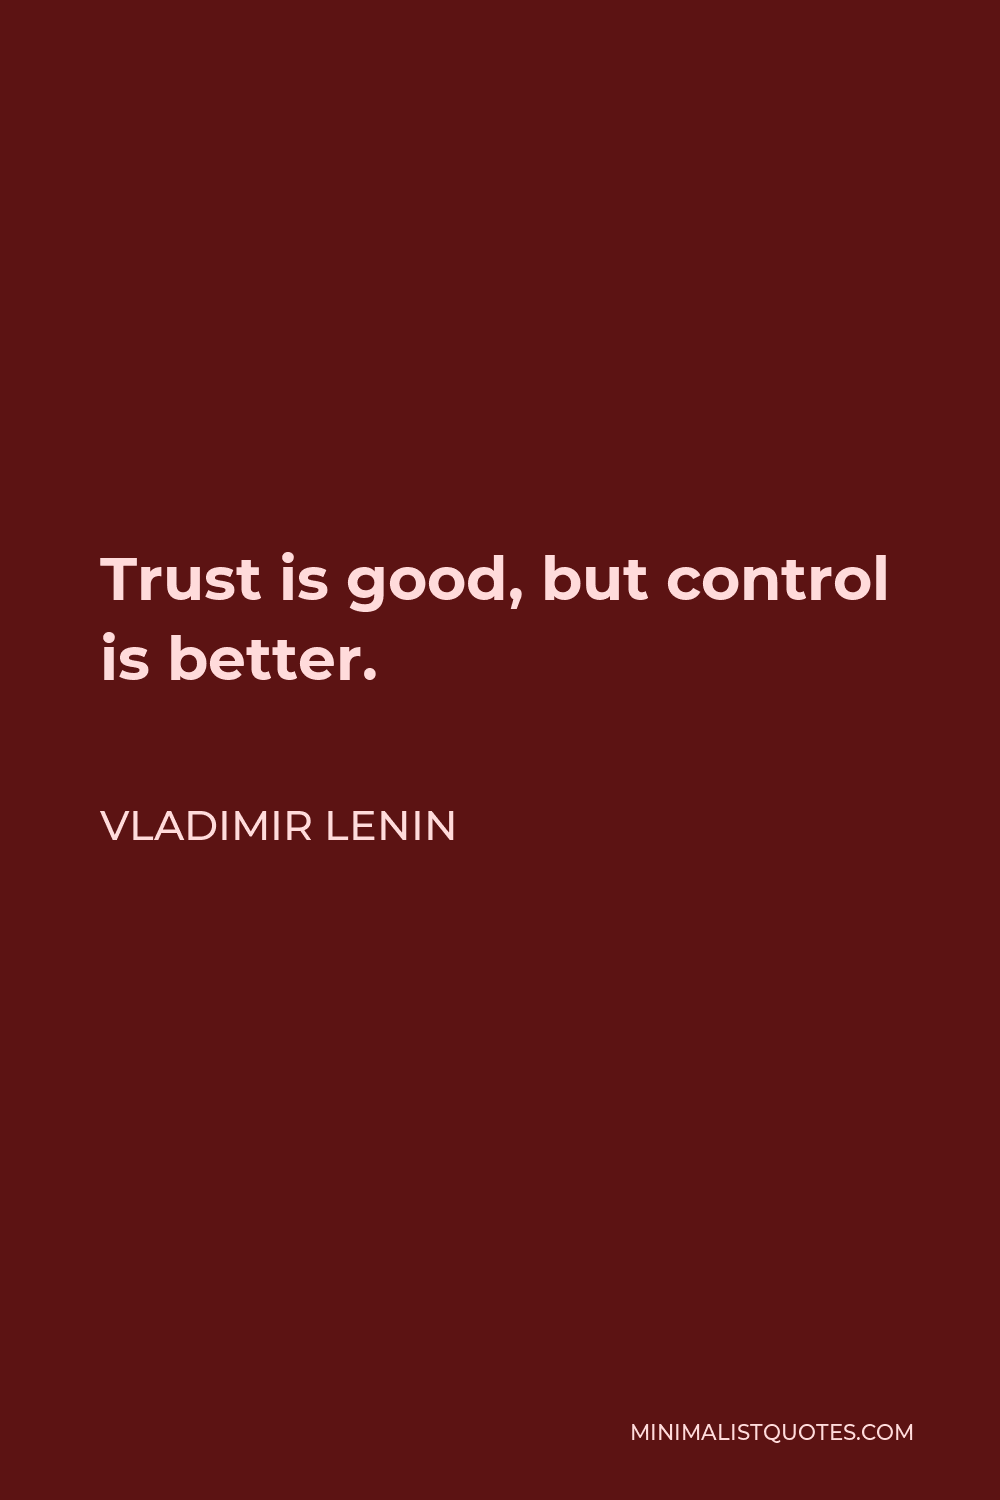 Vladimir Lenin Quote - Trust is good, but control is better.